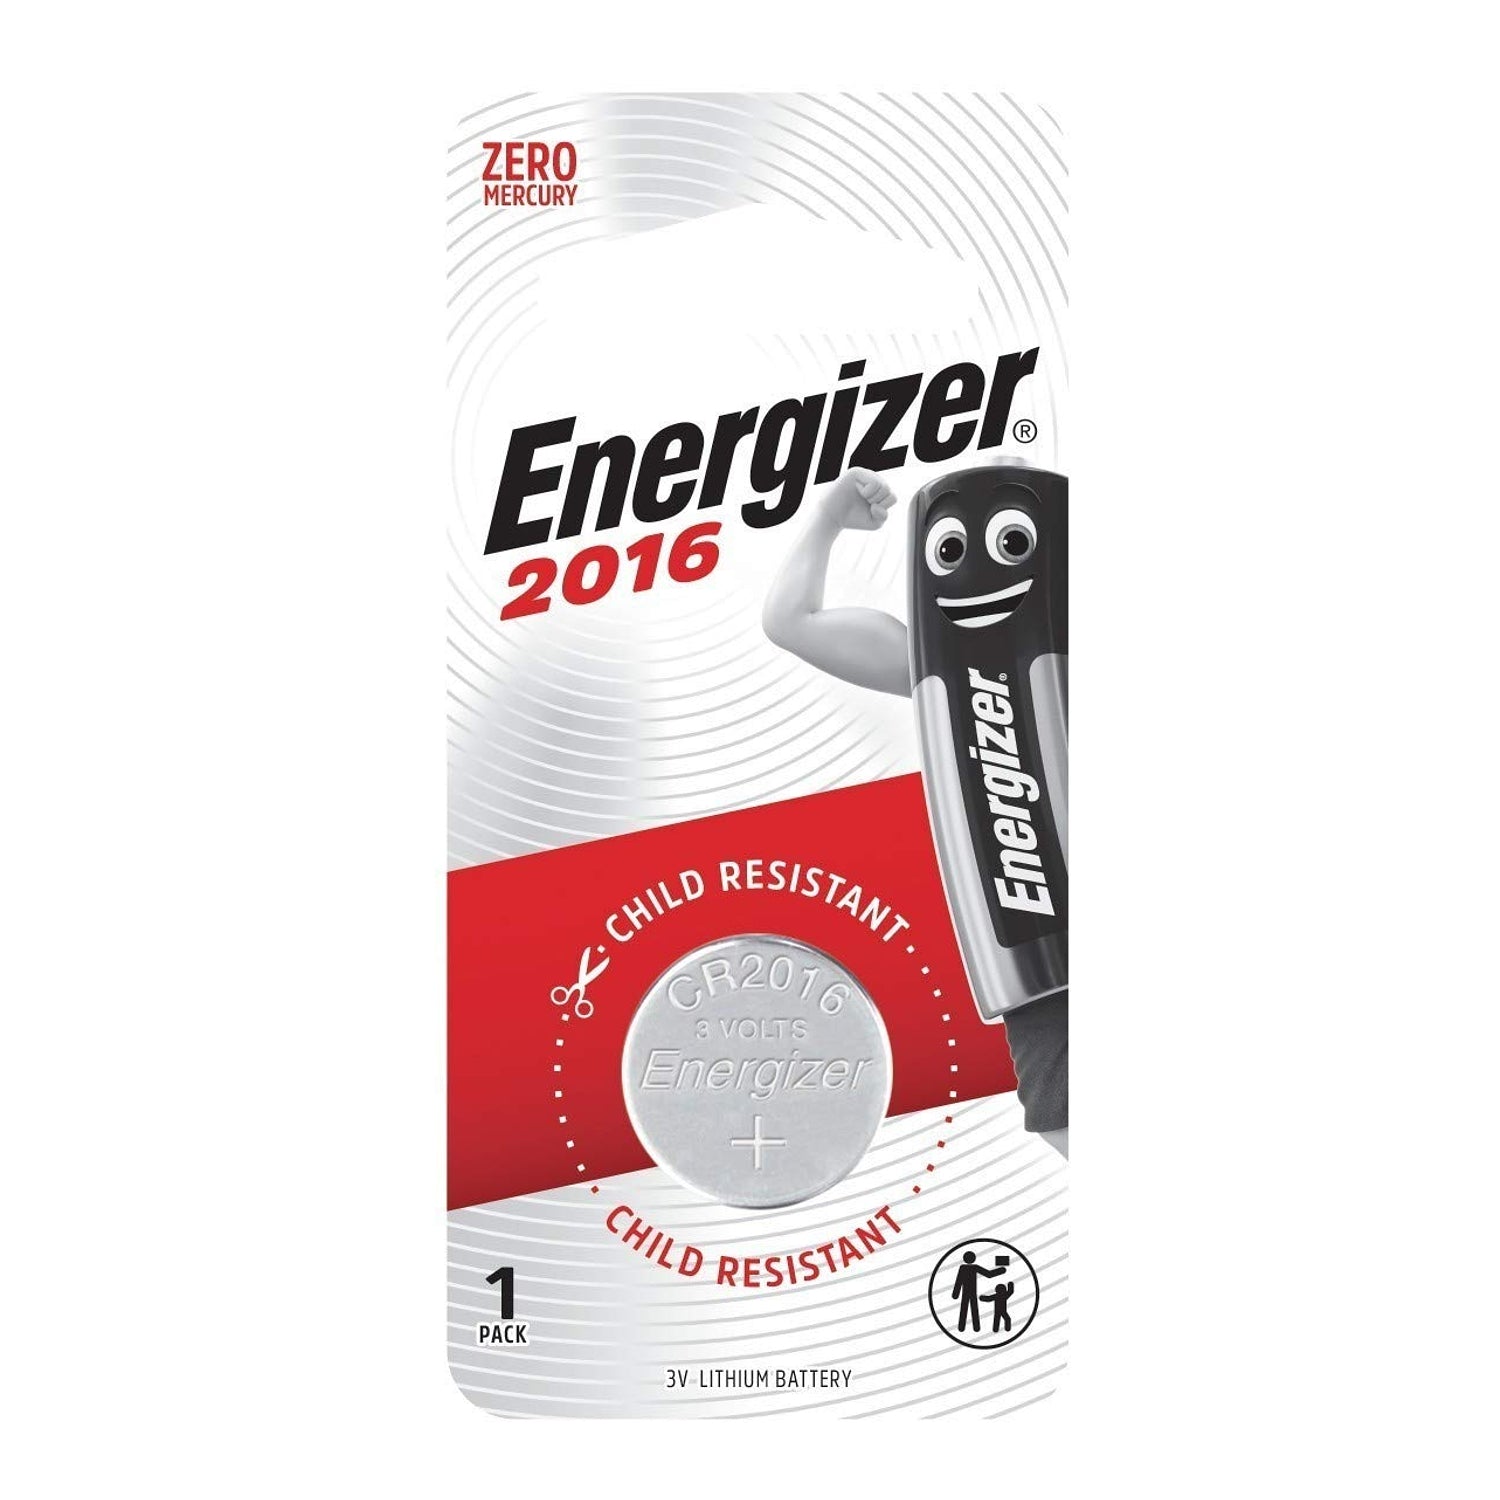 Energizer 2016 bp1 3v lithium coin battery 1pack (moq 12)